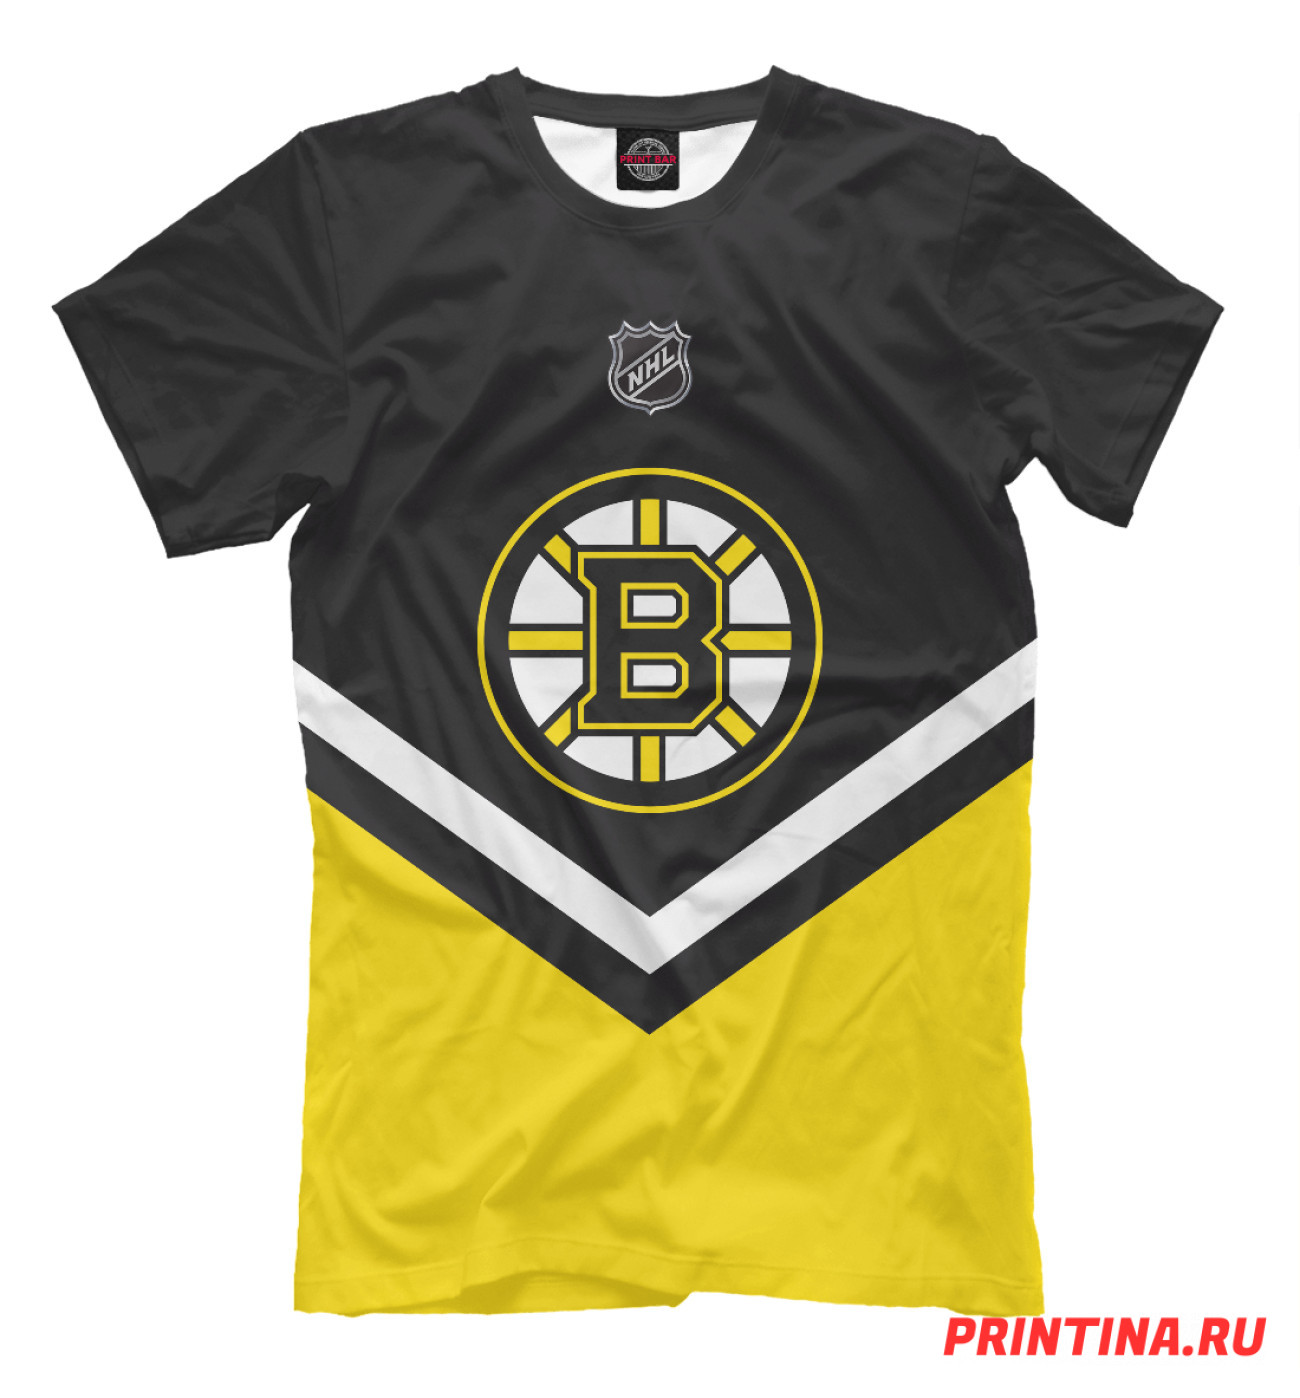 Мужская Футболка Boston Bruins, артикул: HOK-473620-fut-2